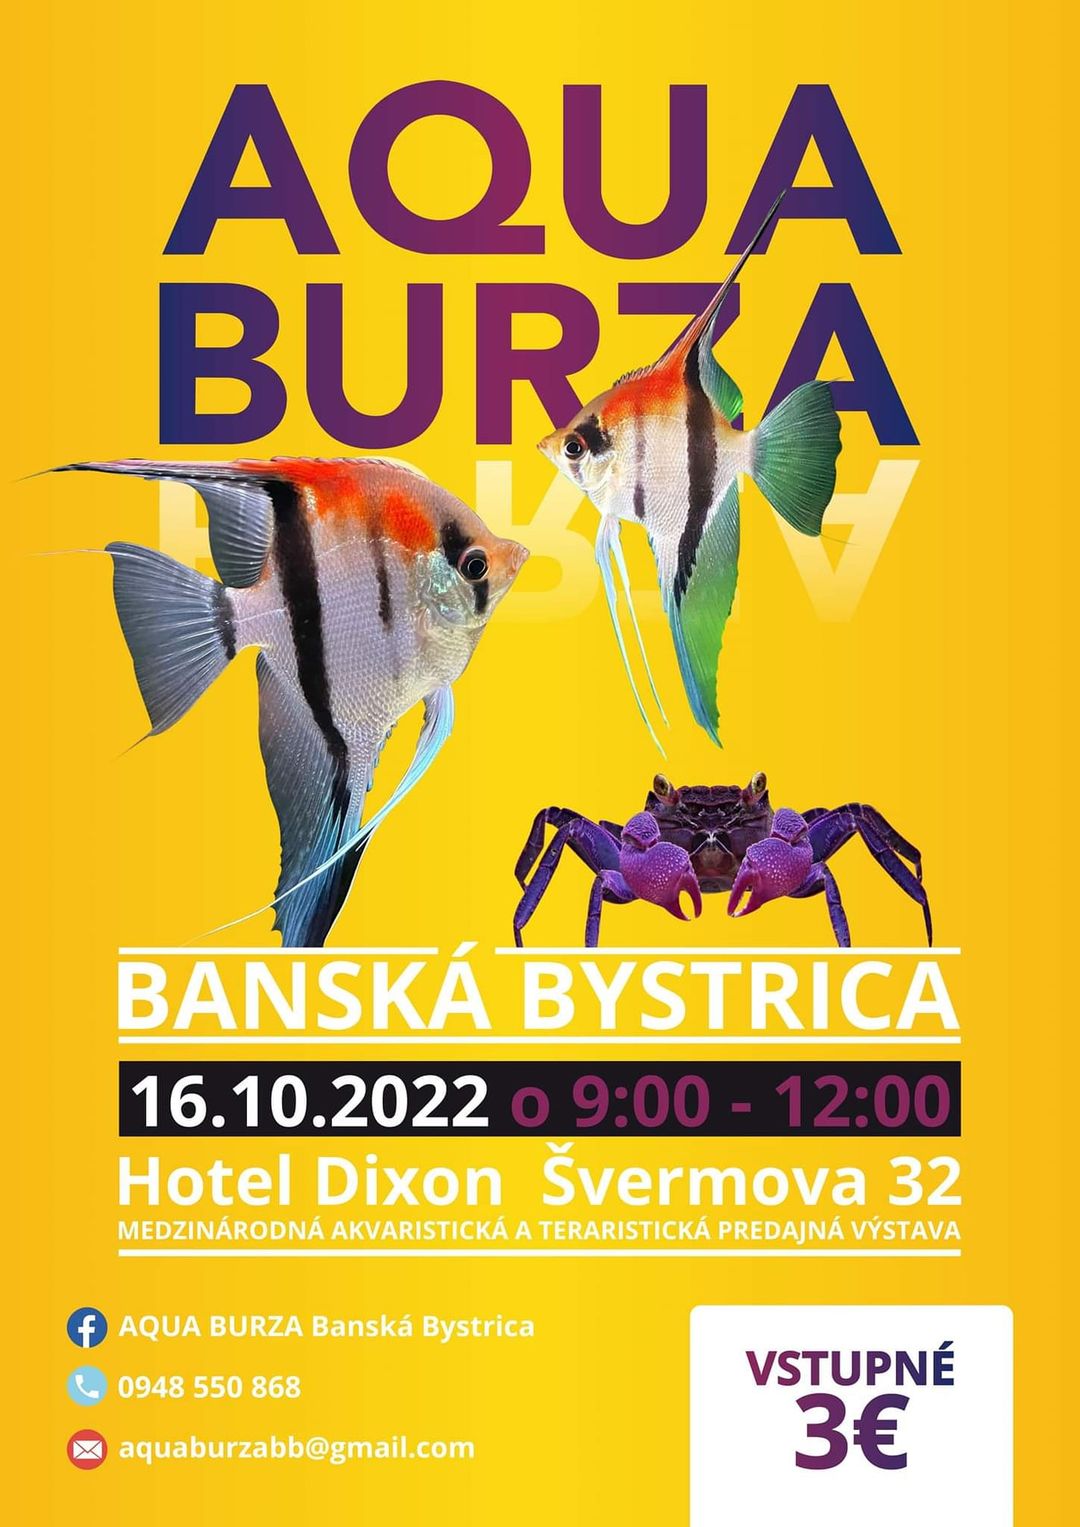 AQUA BURZA Banská Bystrica Hotel Dixon Restauraci